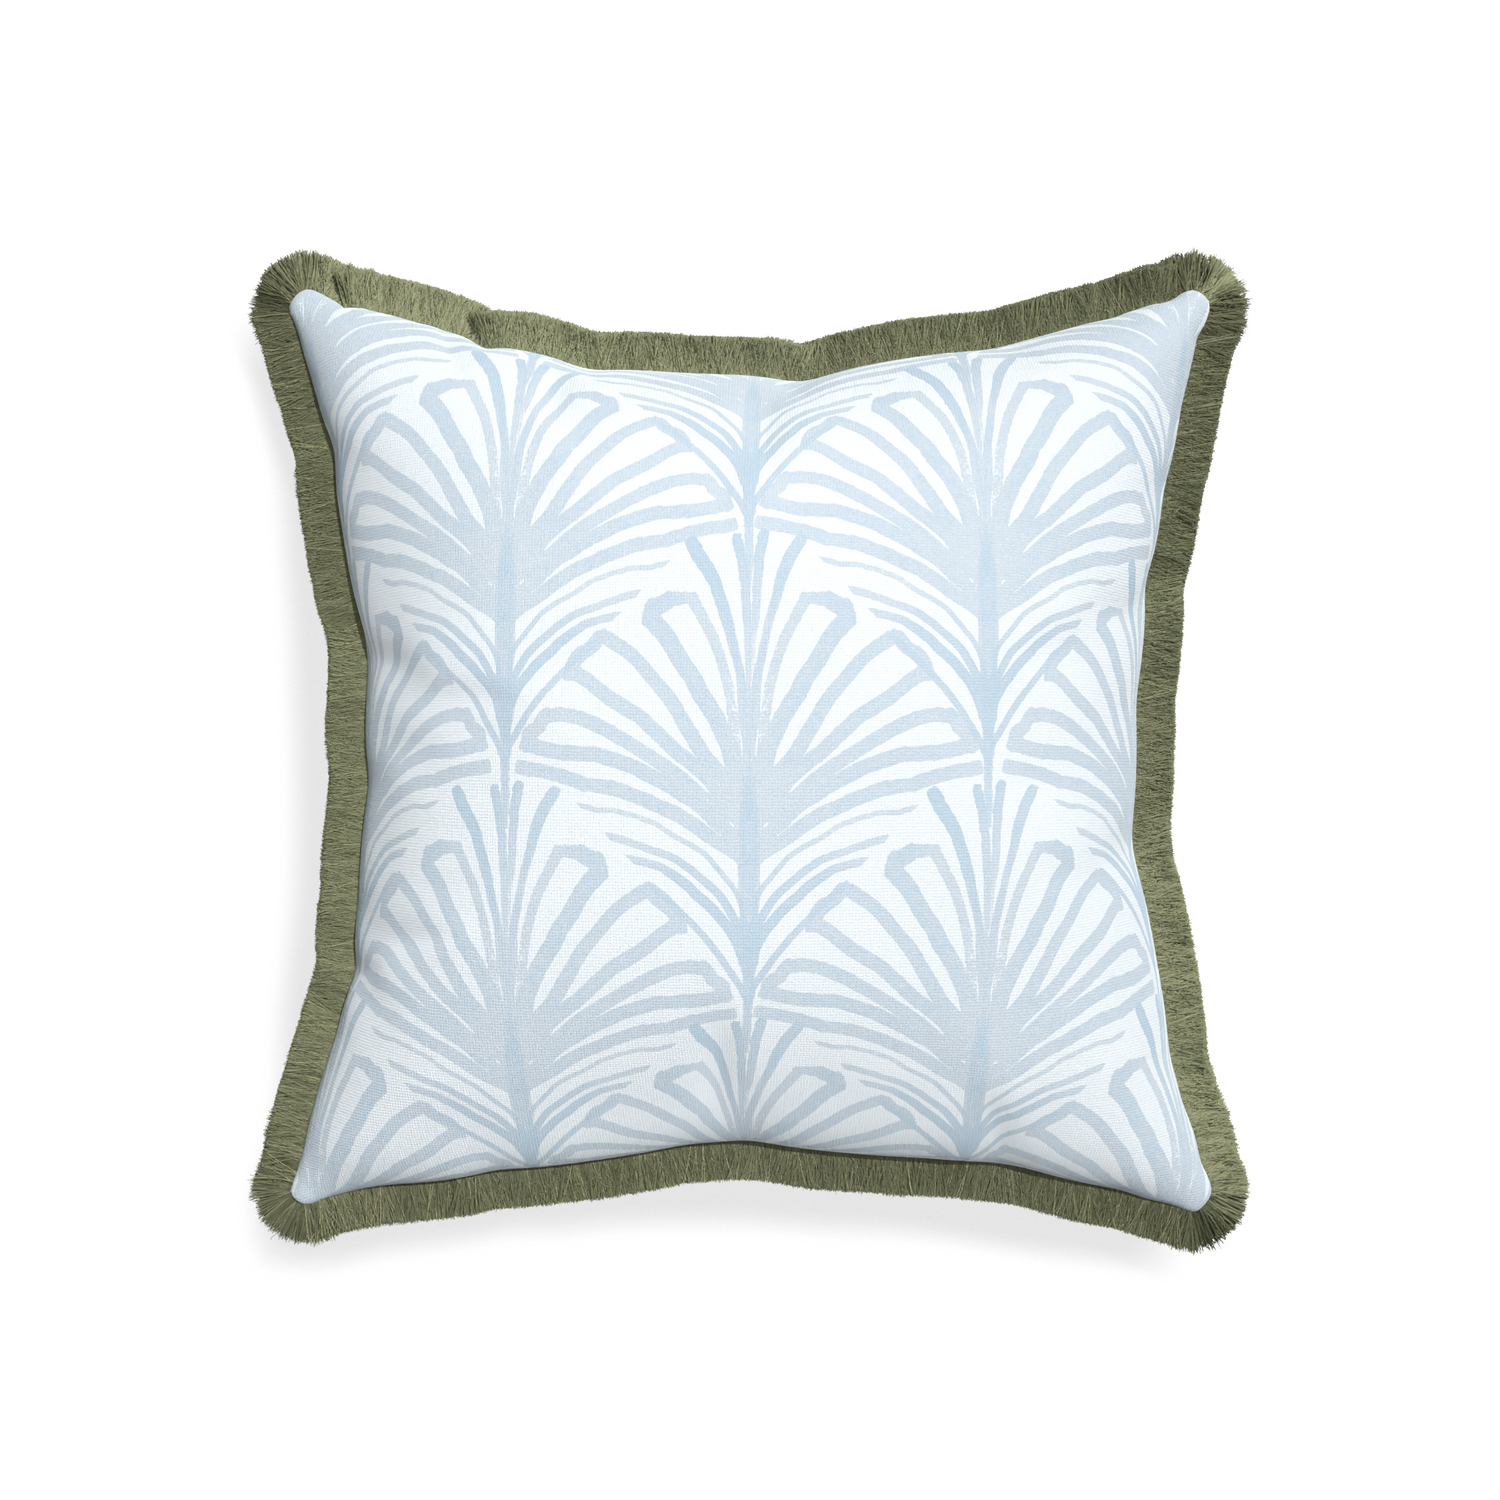 20-square suzy sky custom pillow with sage fringe on white background